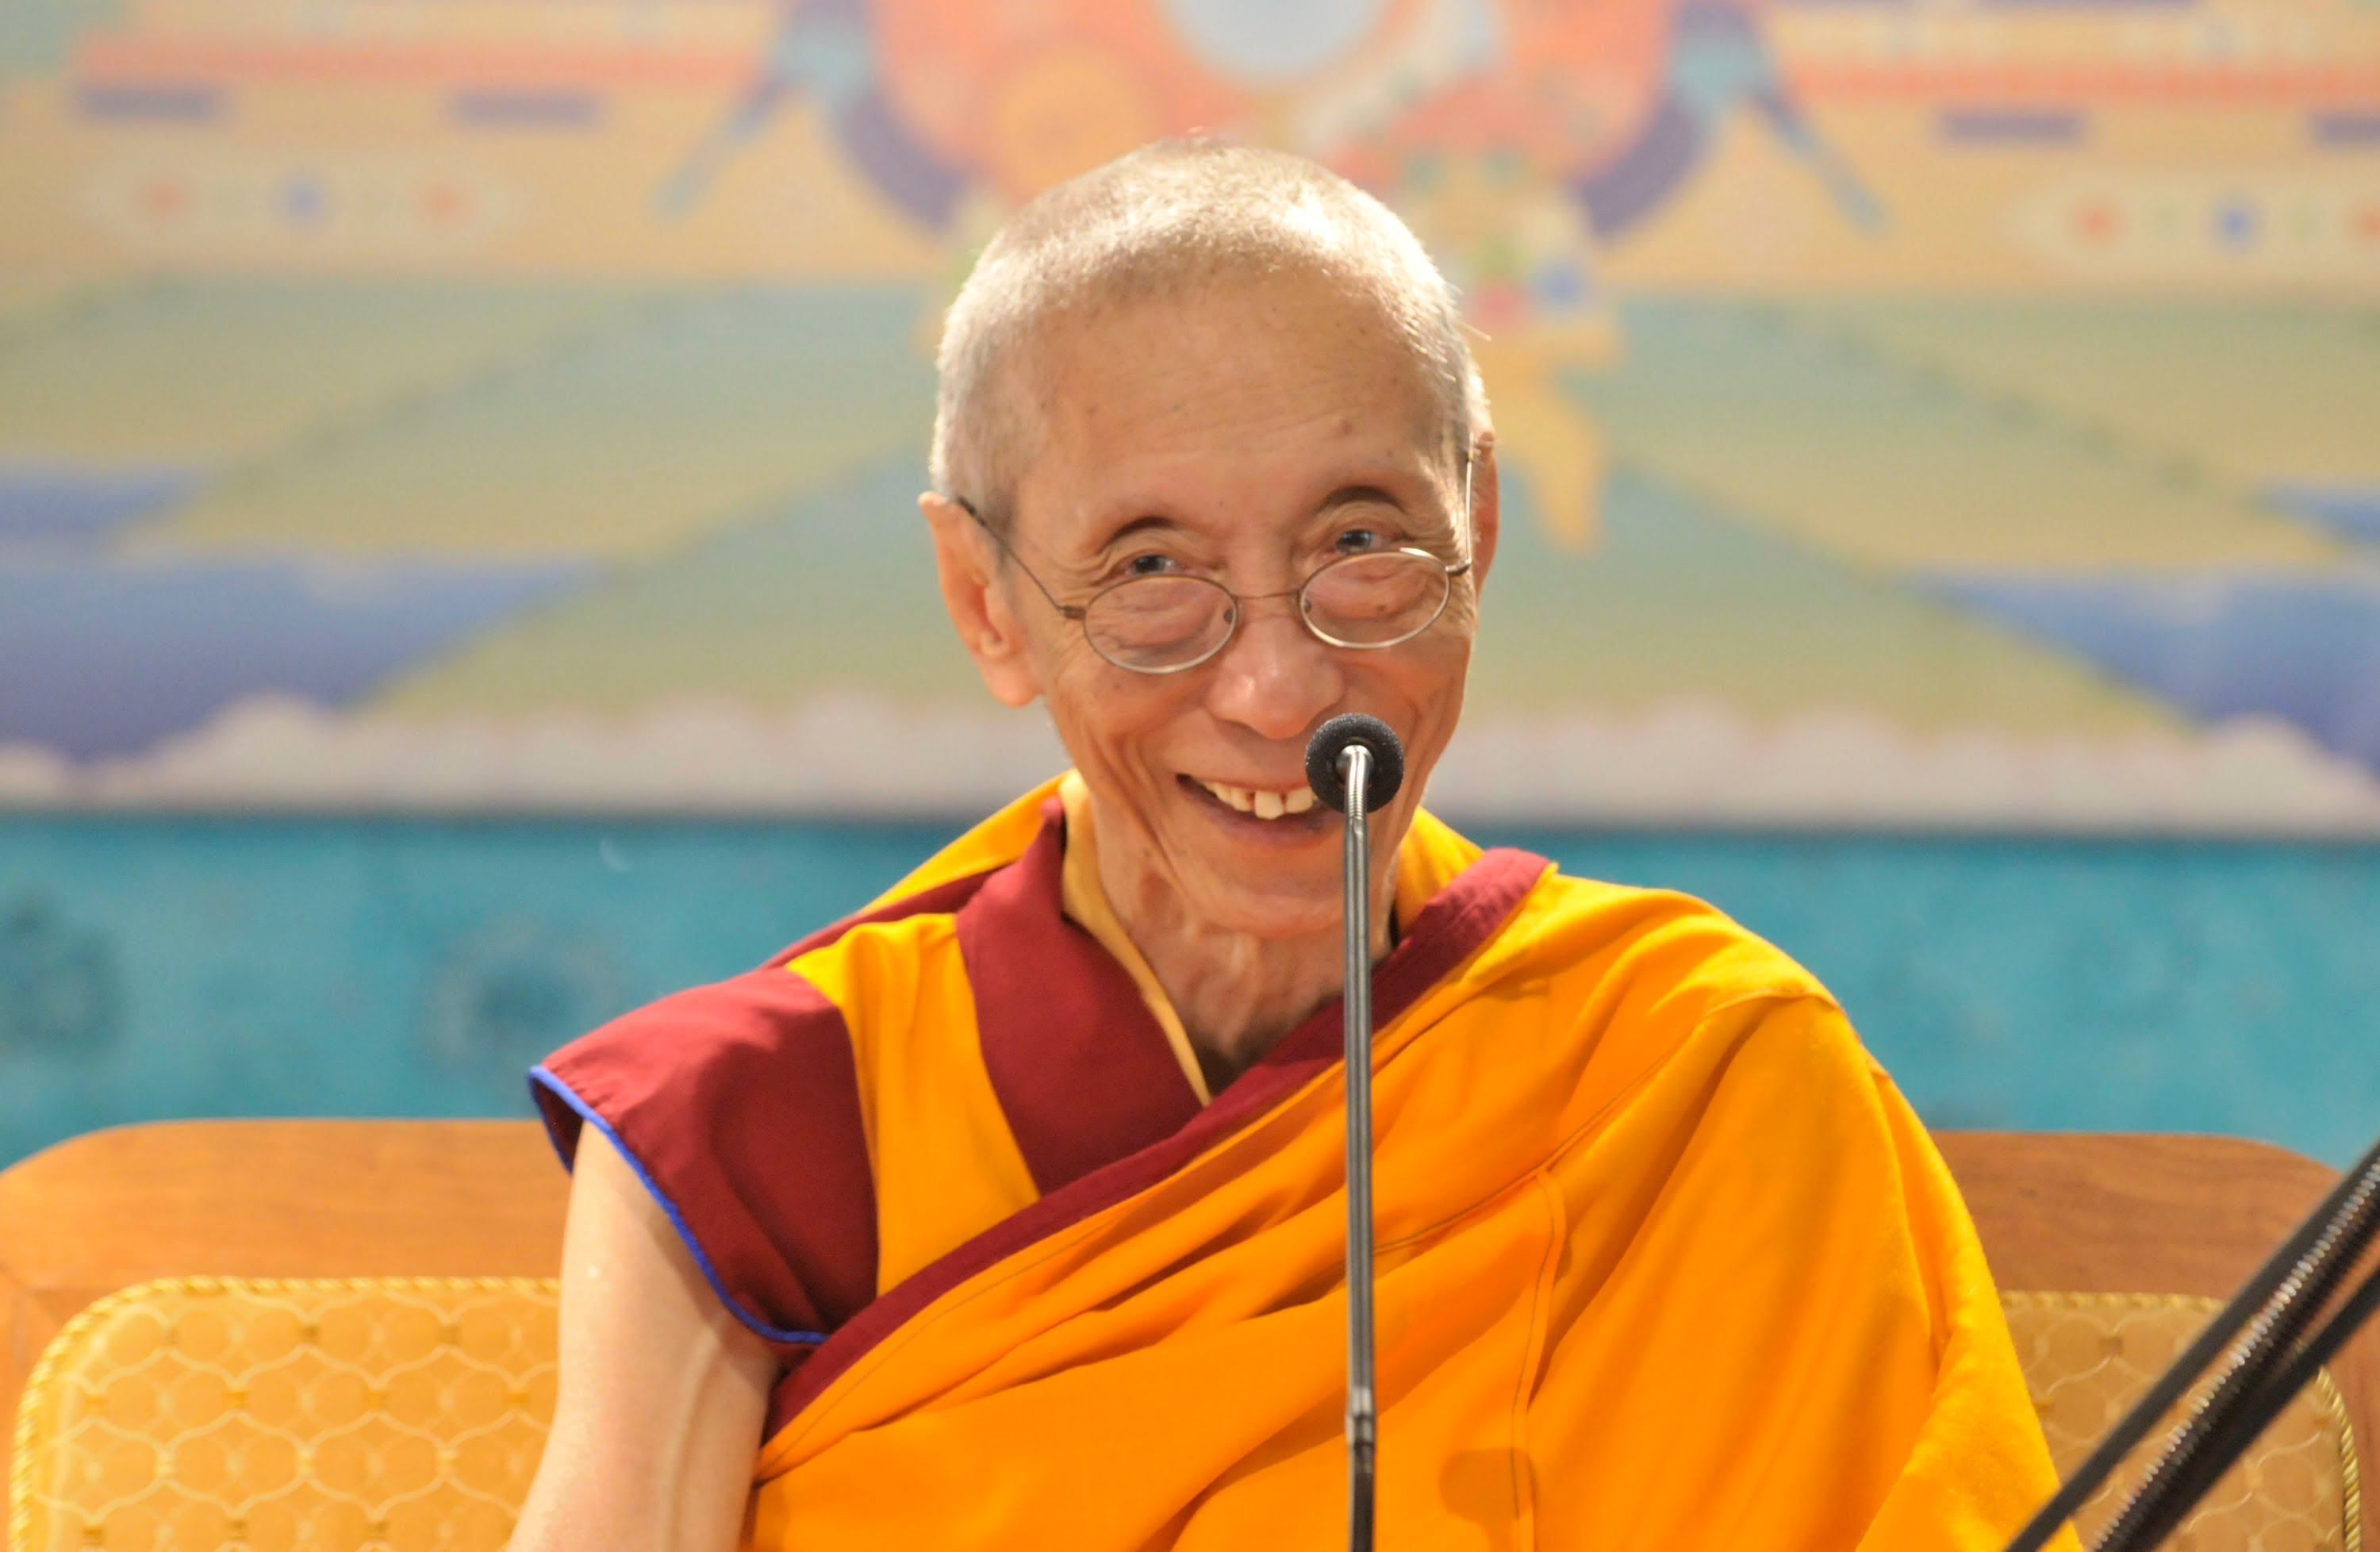 Geshe Kelsang Gyatso - What is wisdom?